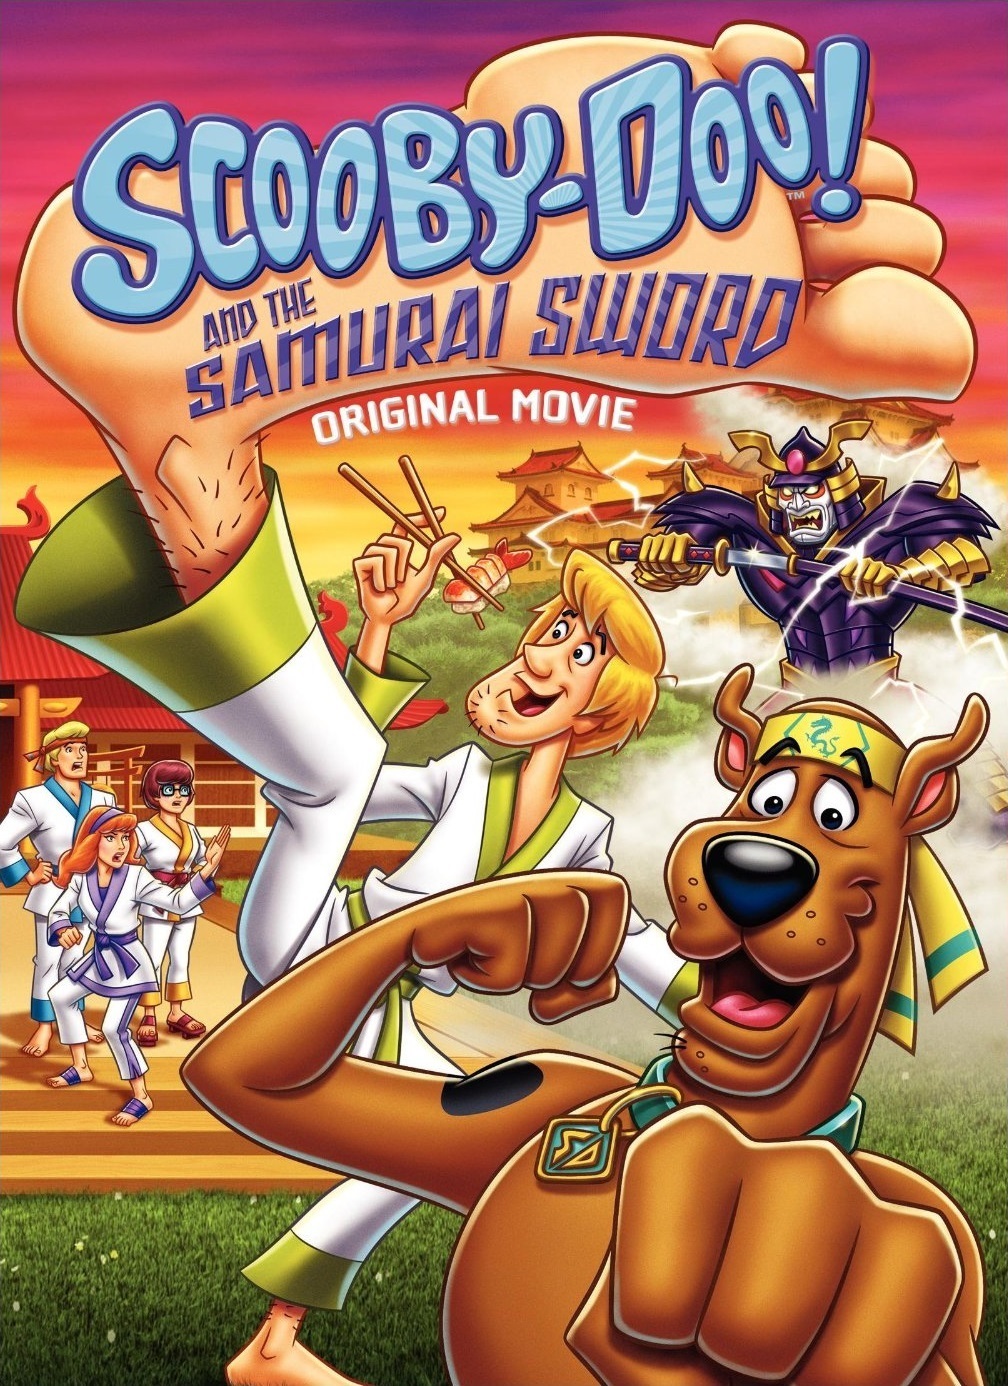 Scooby-Doo! And the Samurai Sword